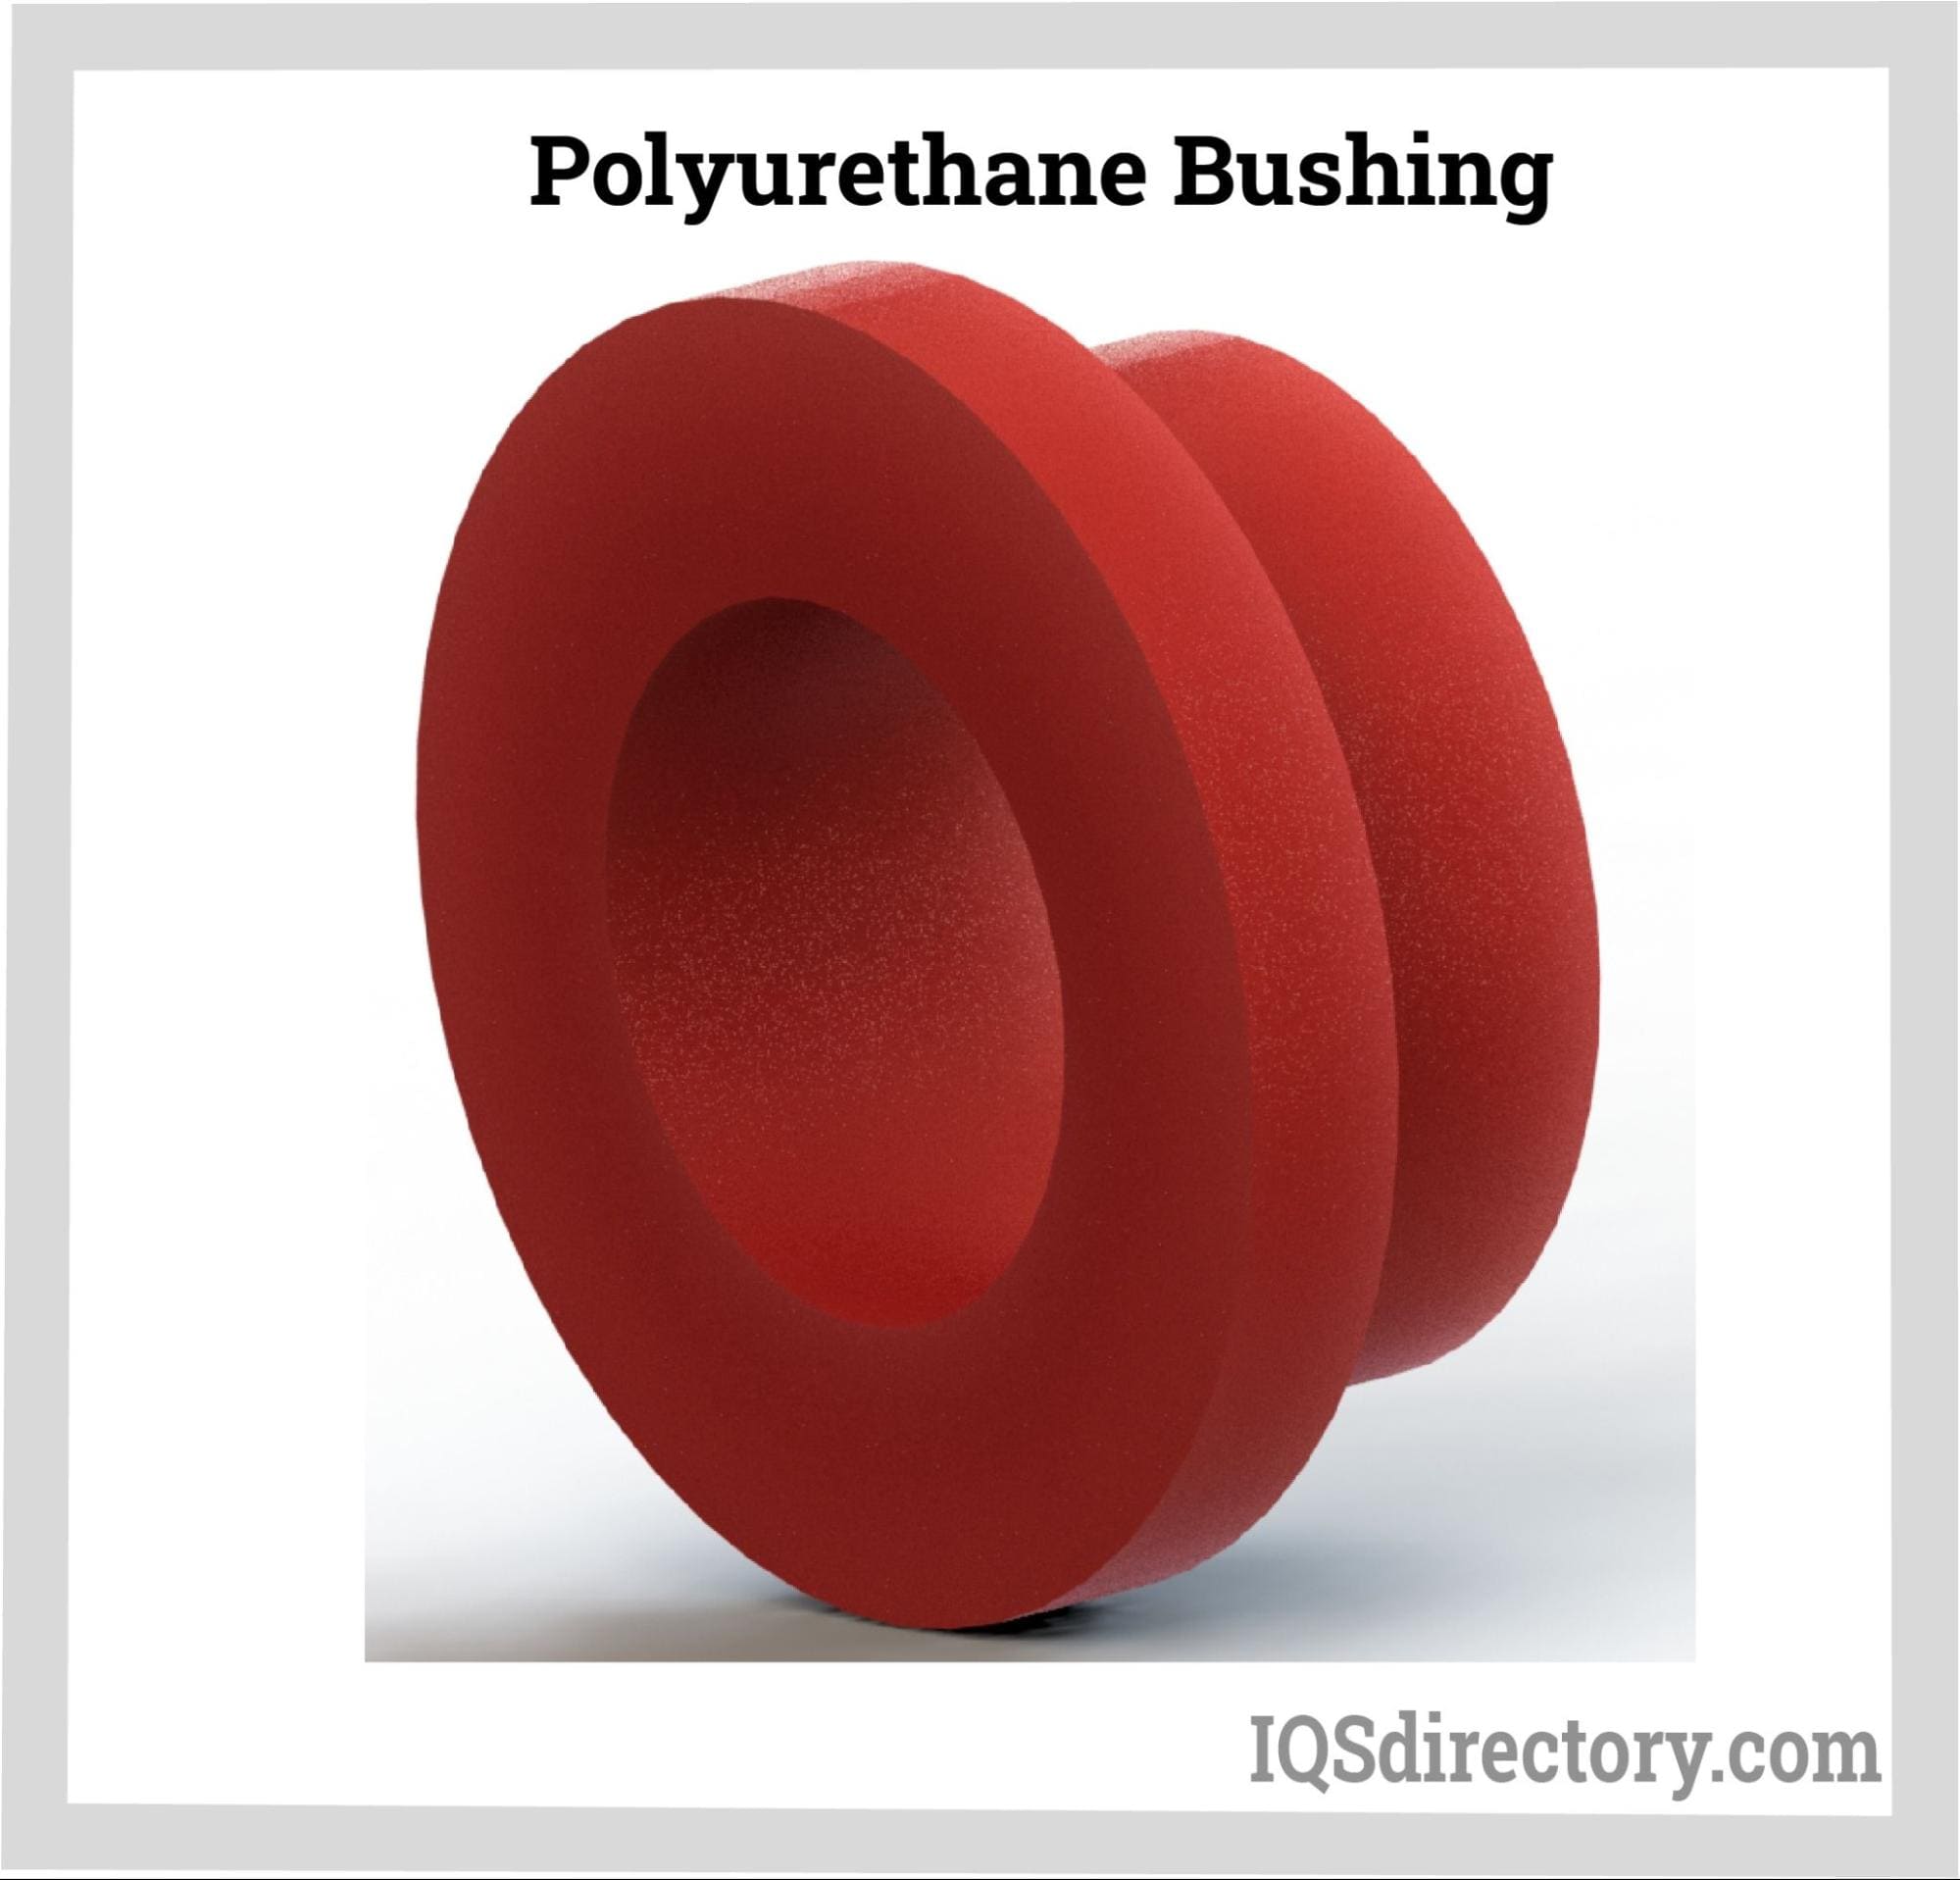 Polyurethane Bushing